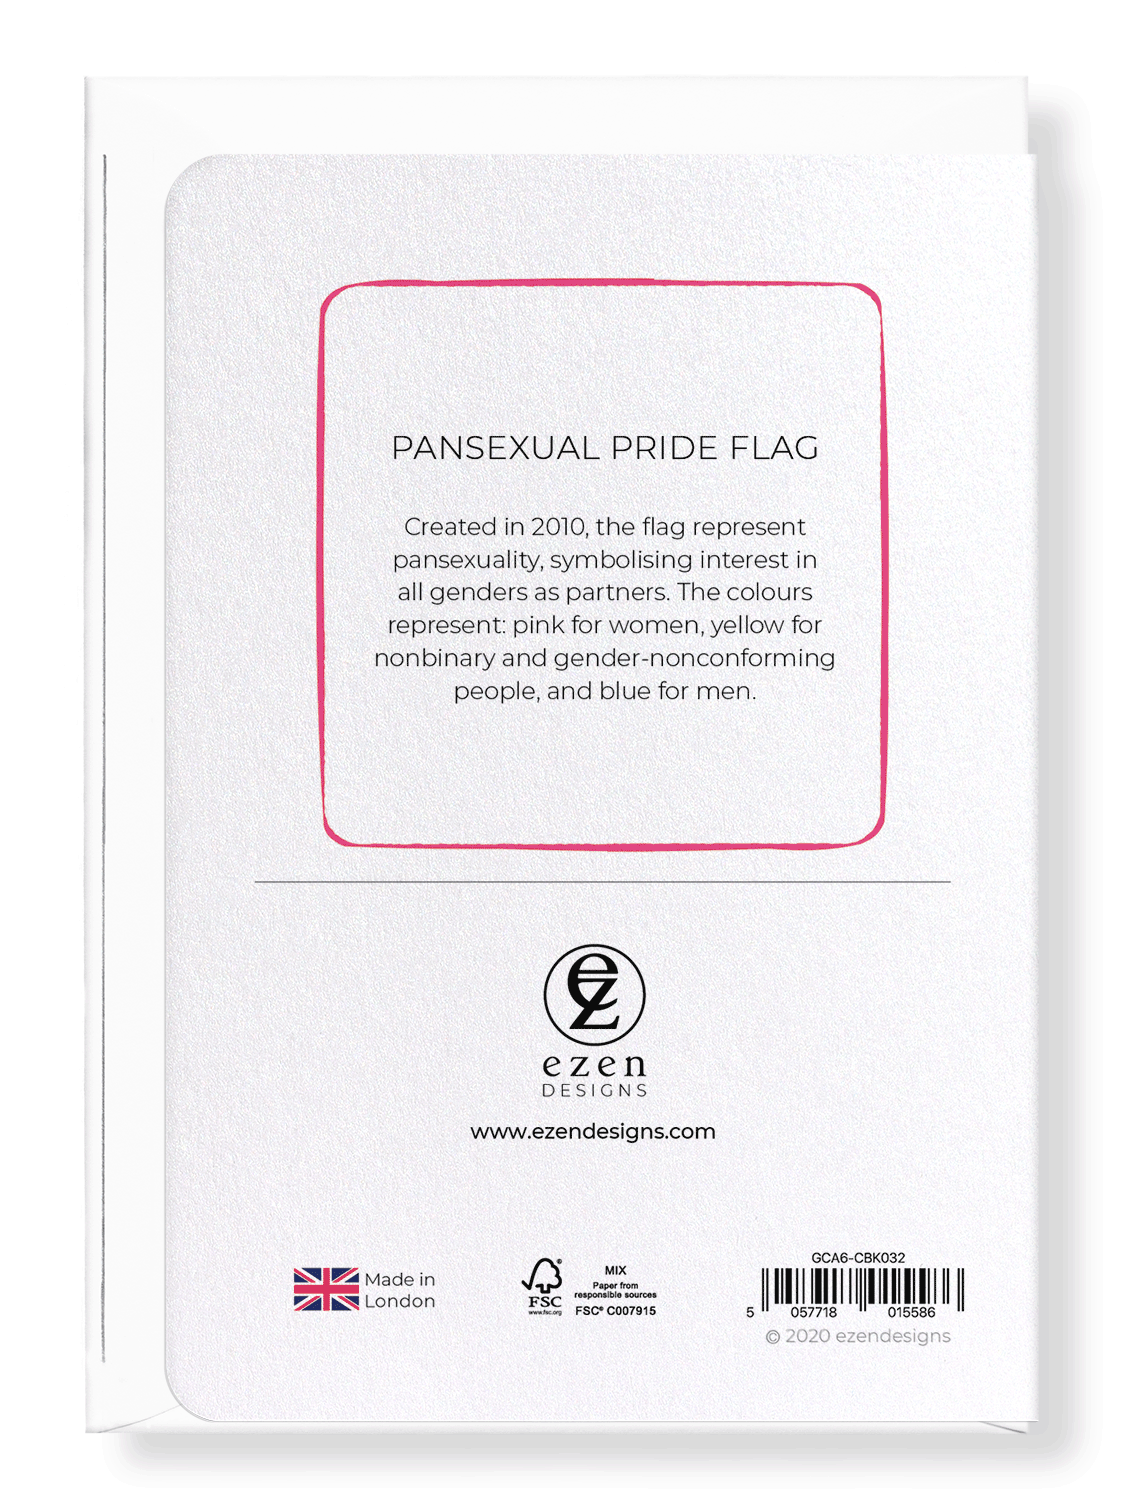 Ezen Designs - Pansexual pride flag - Greeting Card - Back